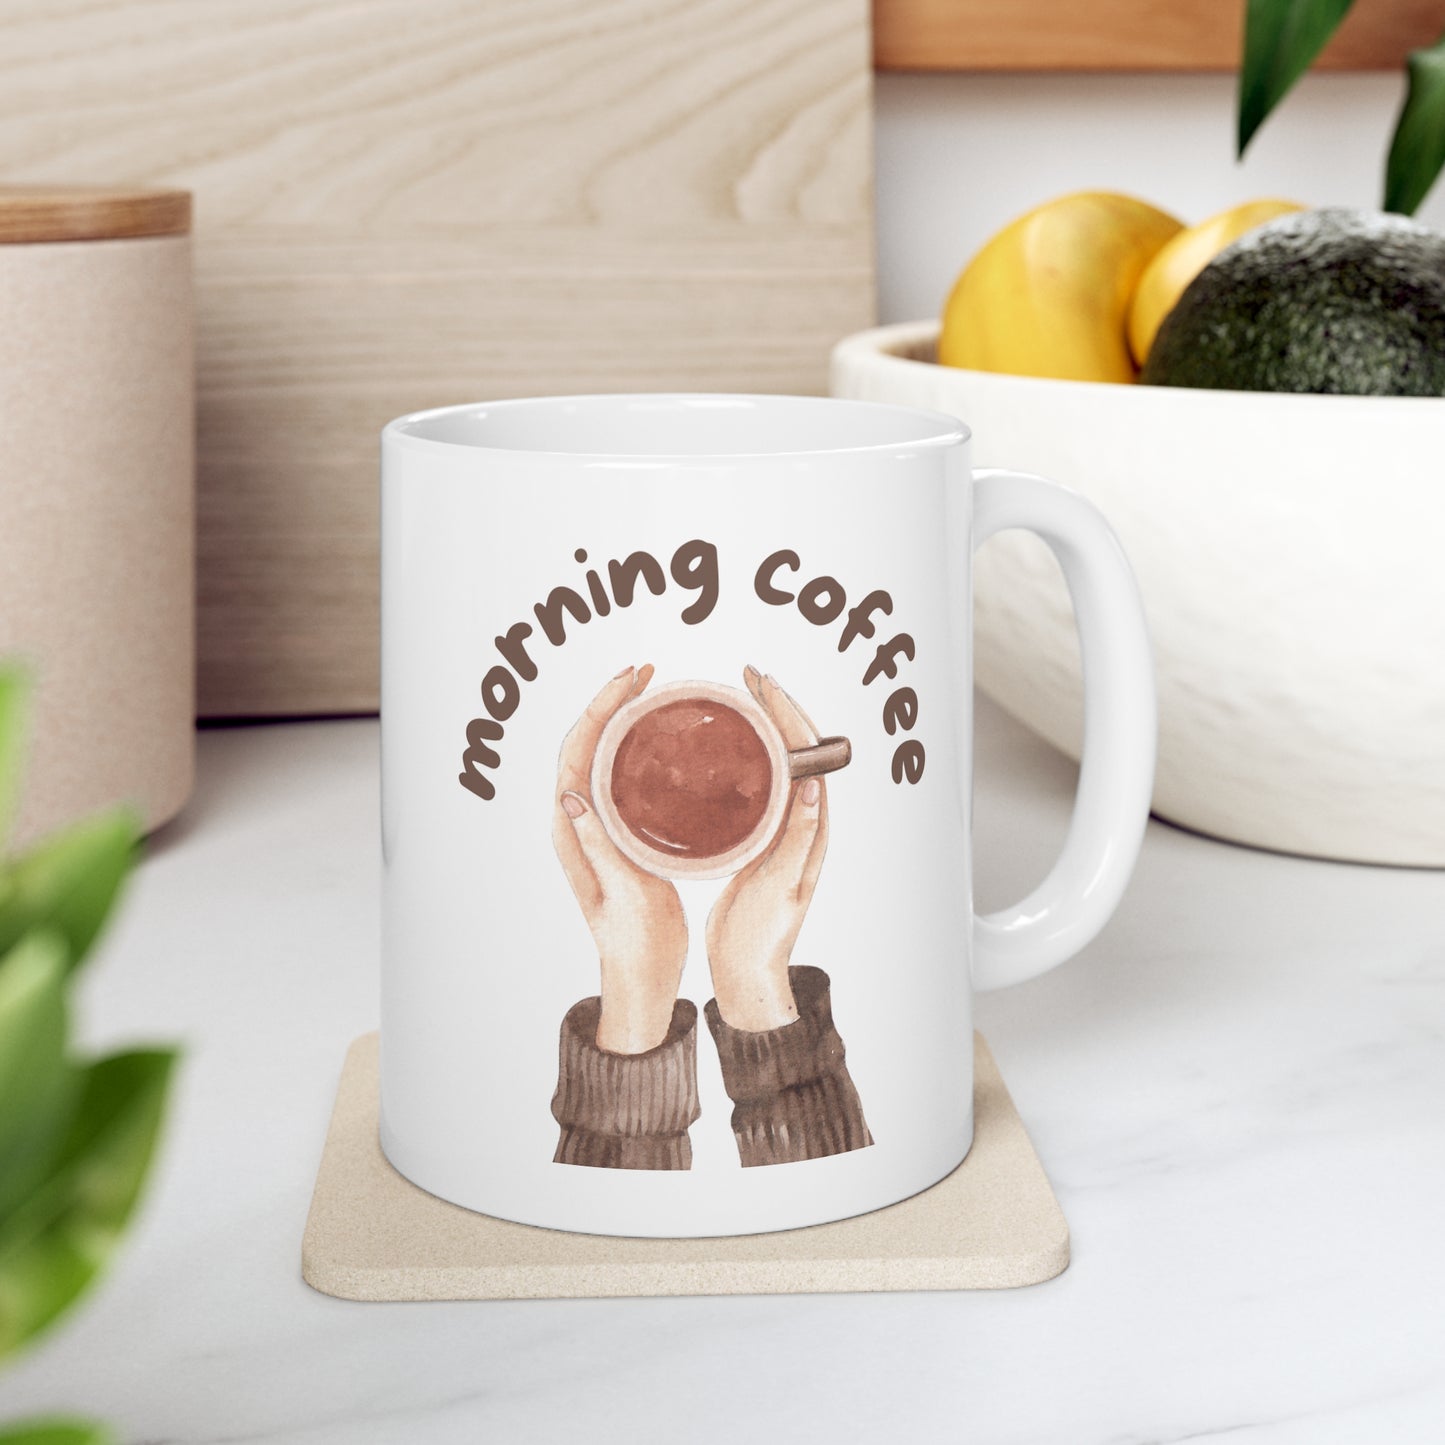 Morning Coffee mug